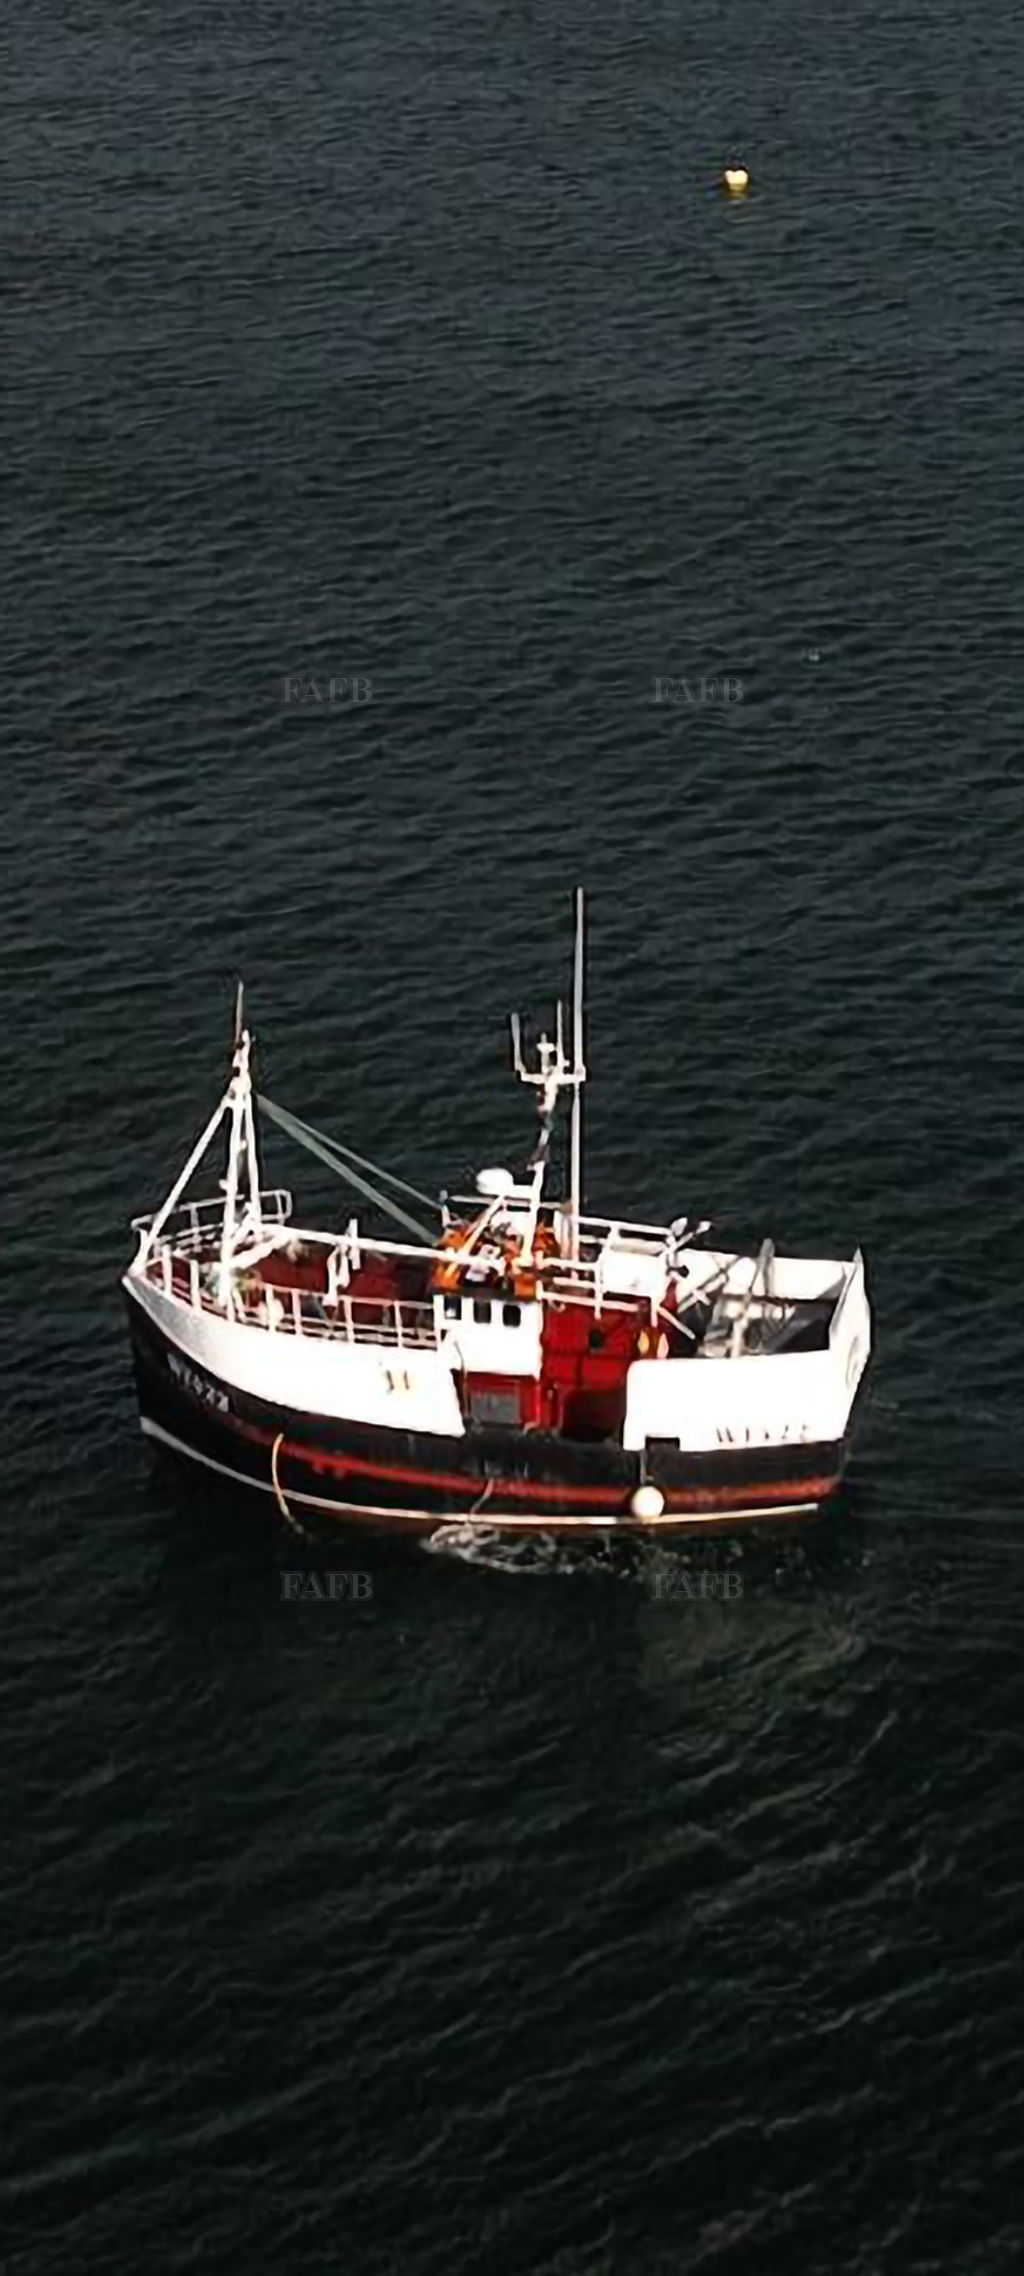 Vivier crabber /Gillnetter may P.X for smaller boat rigged pots /nets